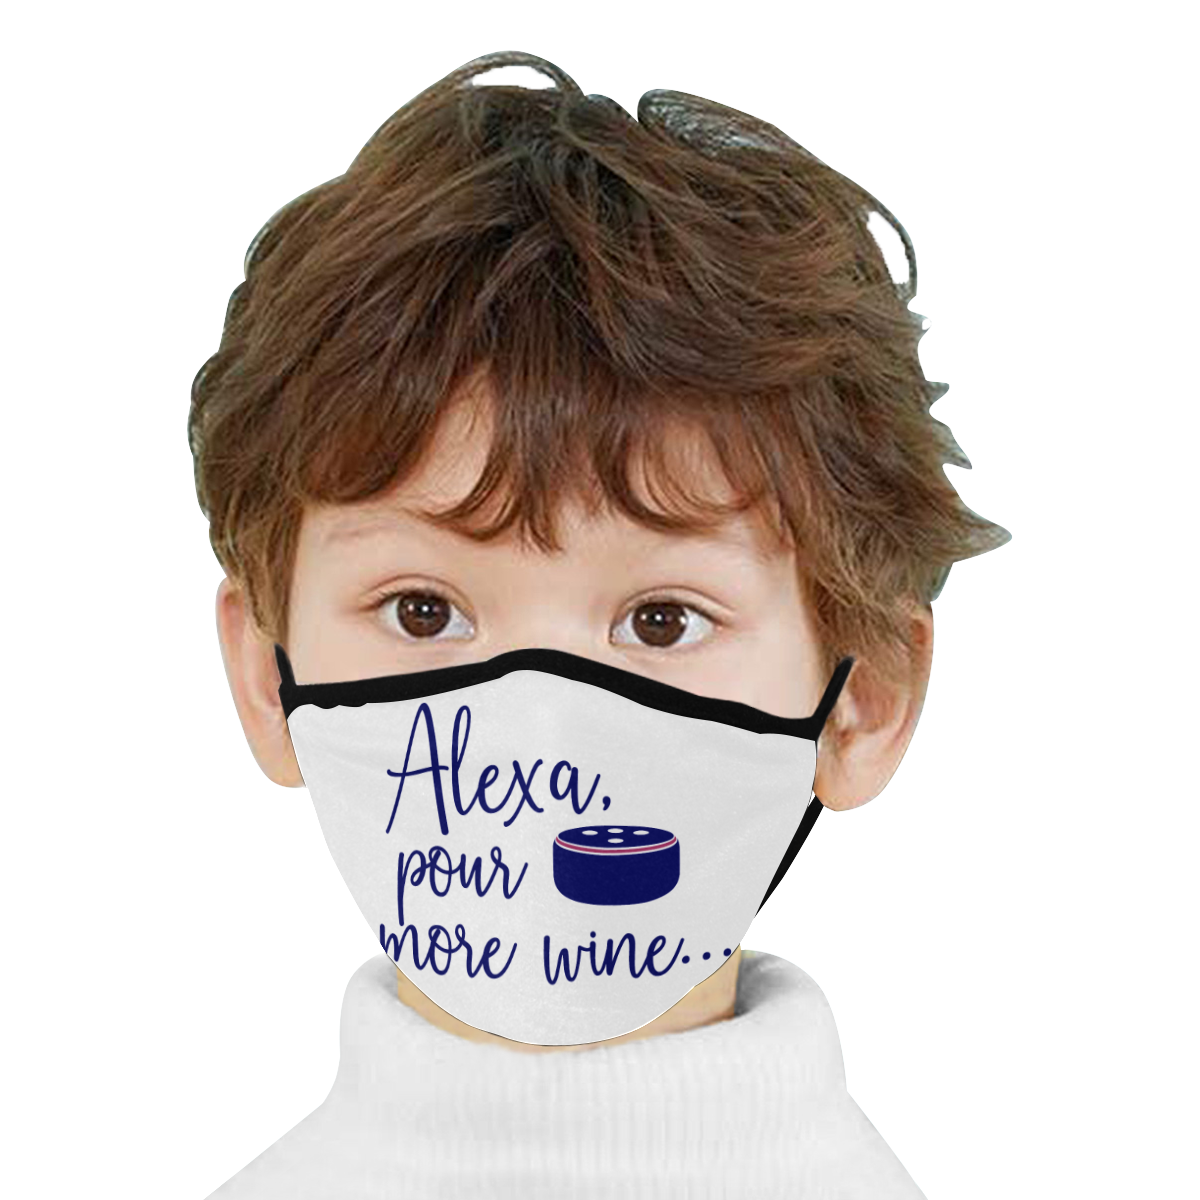 Humor - Alexa pour more wine - dark blue on white Mouth Mask